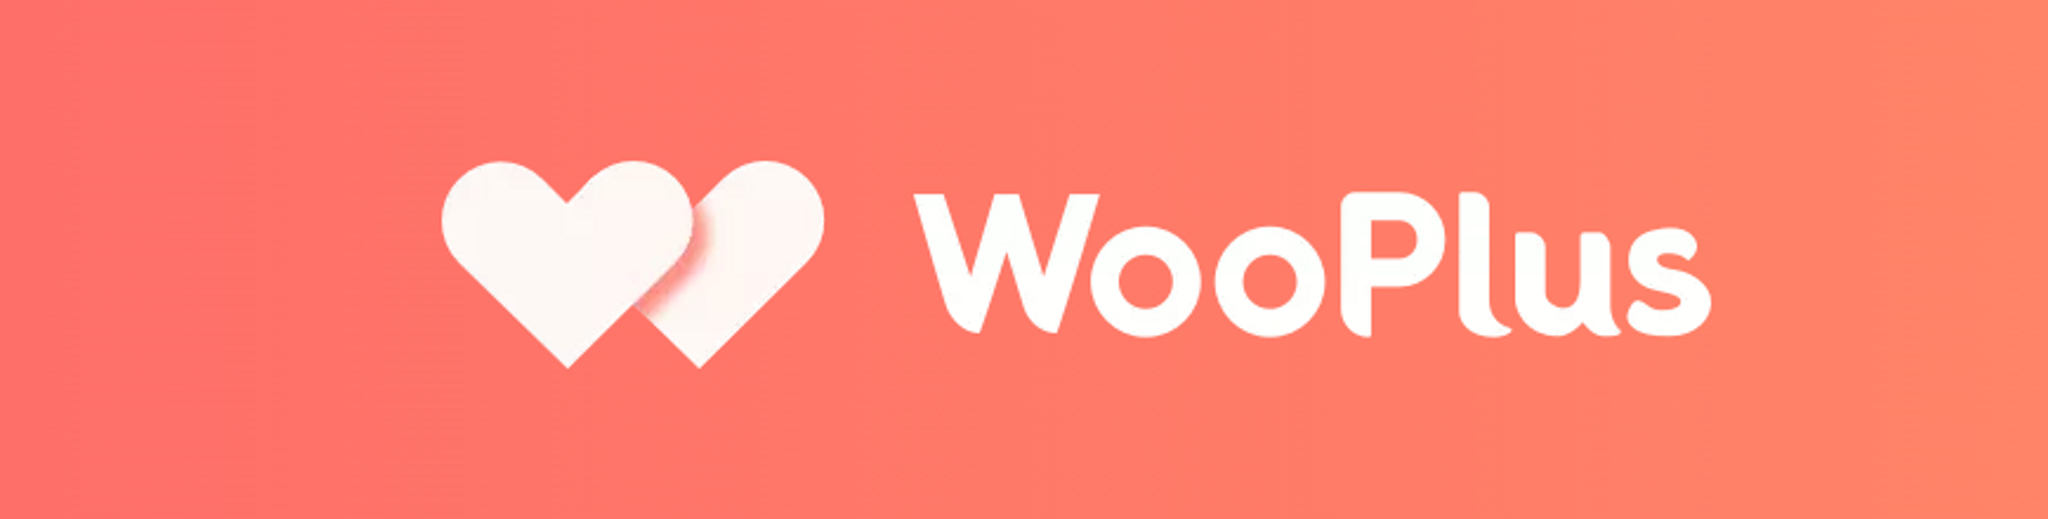 wooplus logo, the best free BBW hookup site